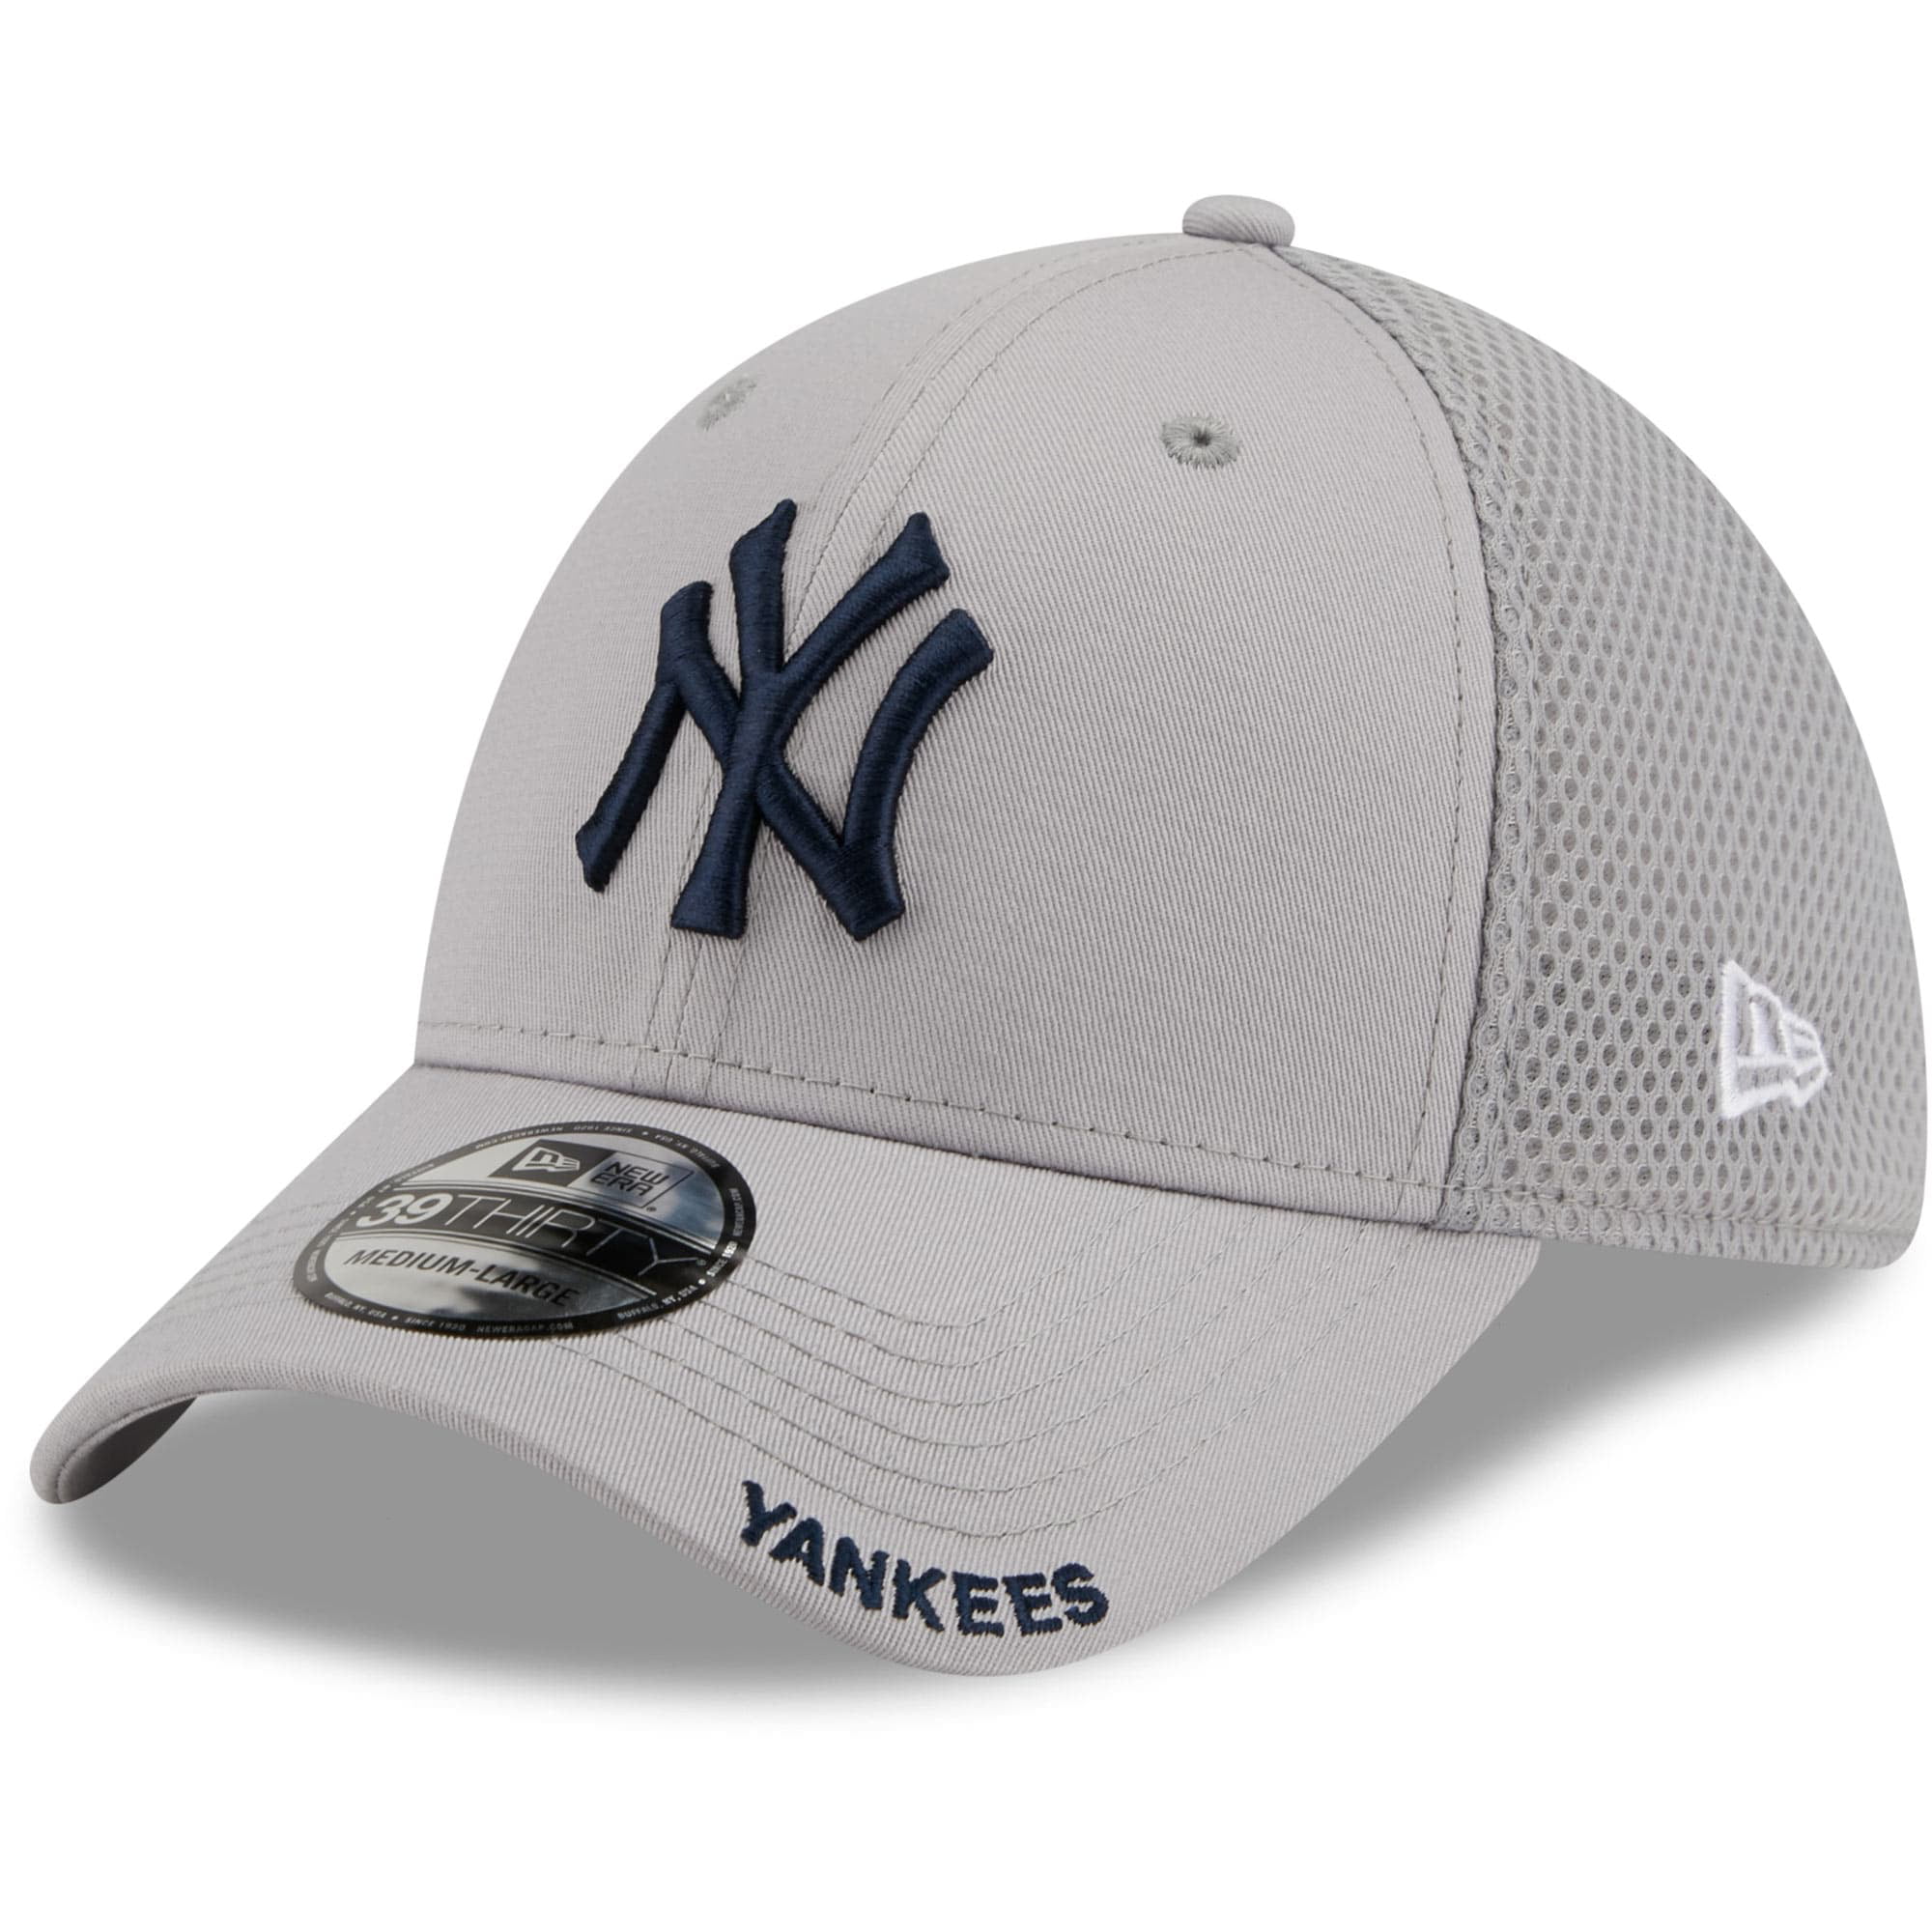 New Era 39Thirty Stretch Cap New York Yankees navy sky